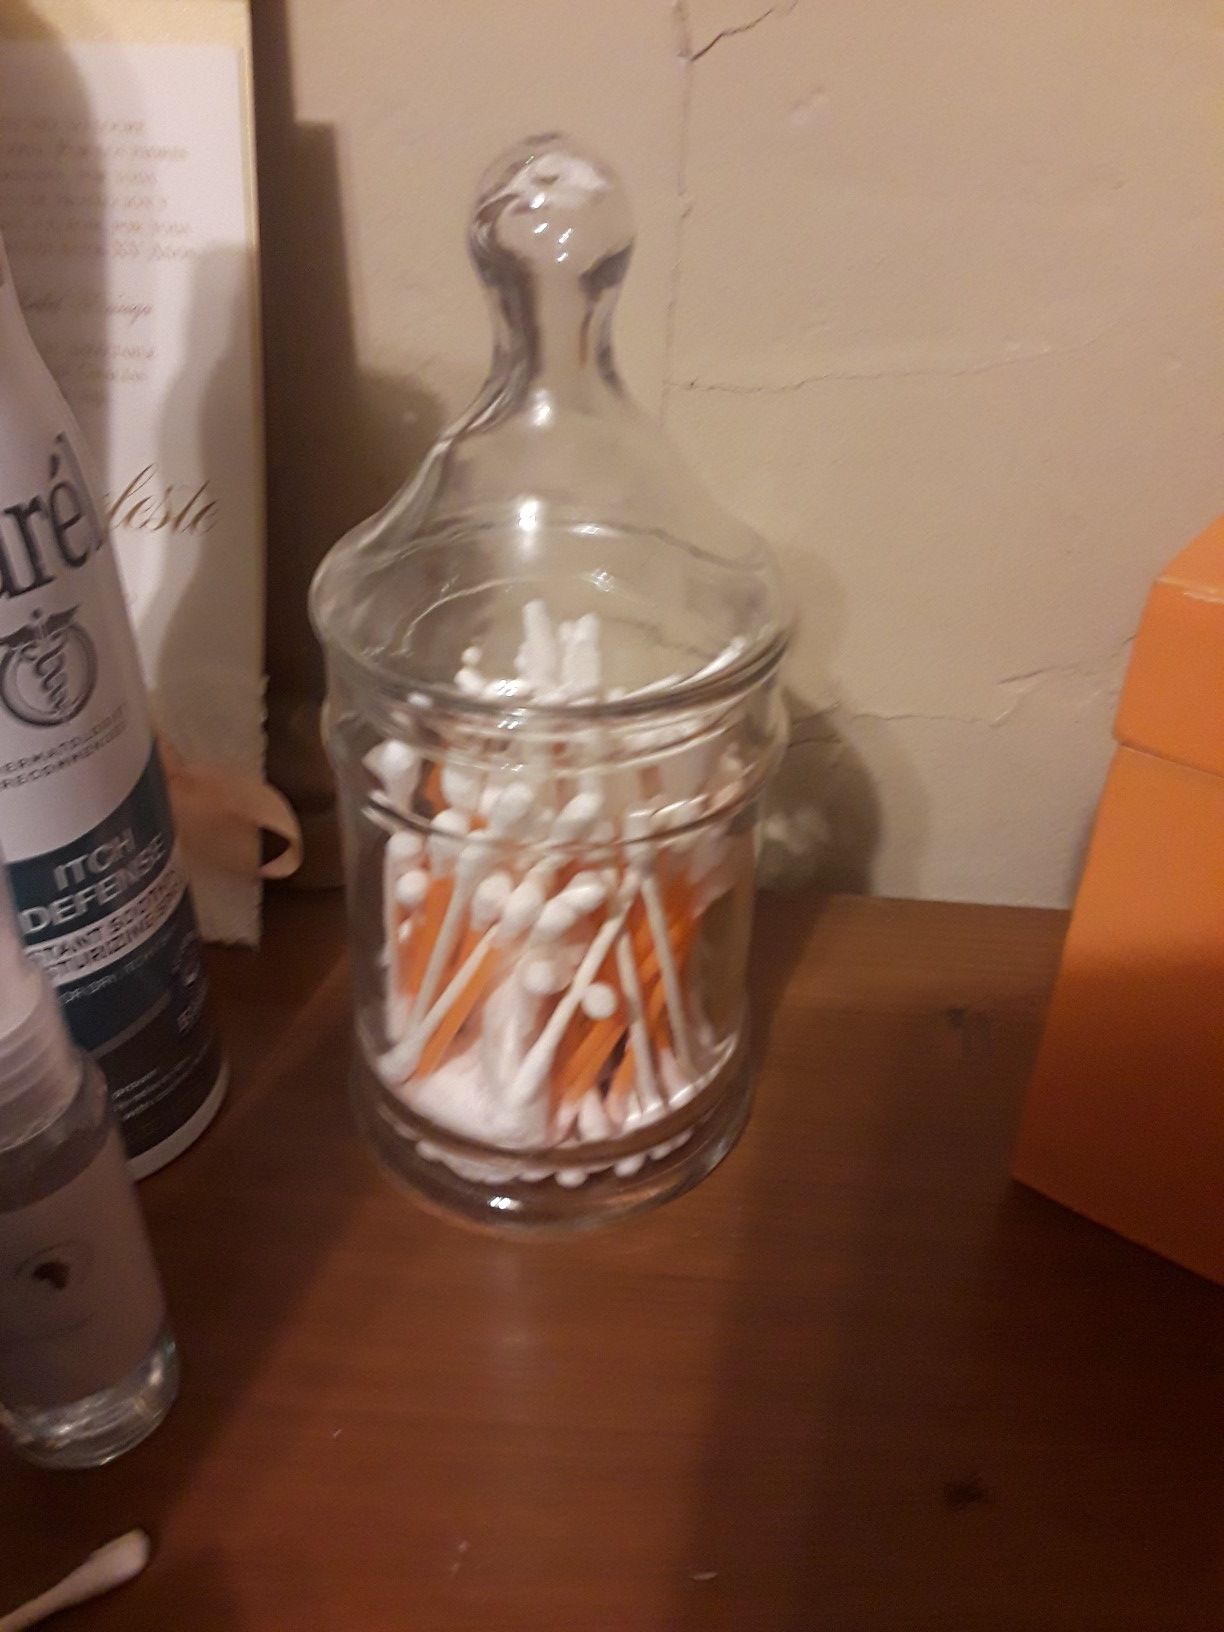 Vintage glass jar w/ lid